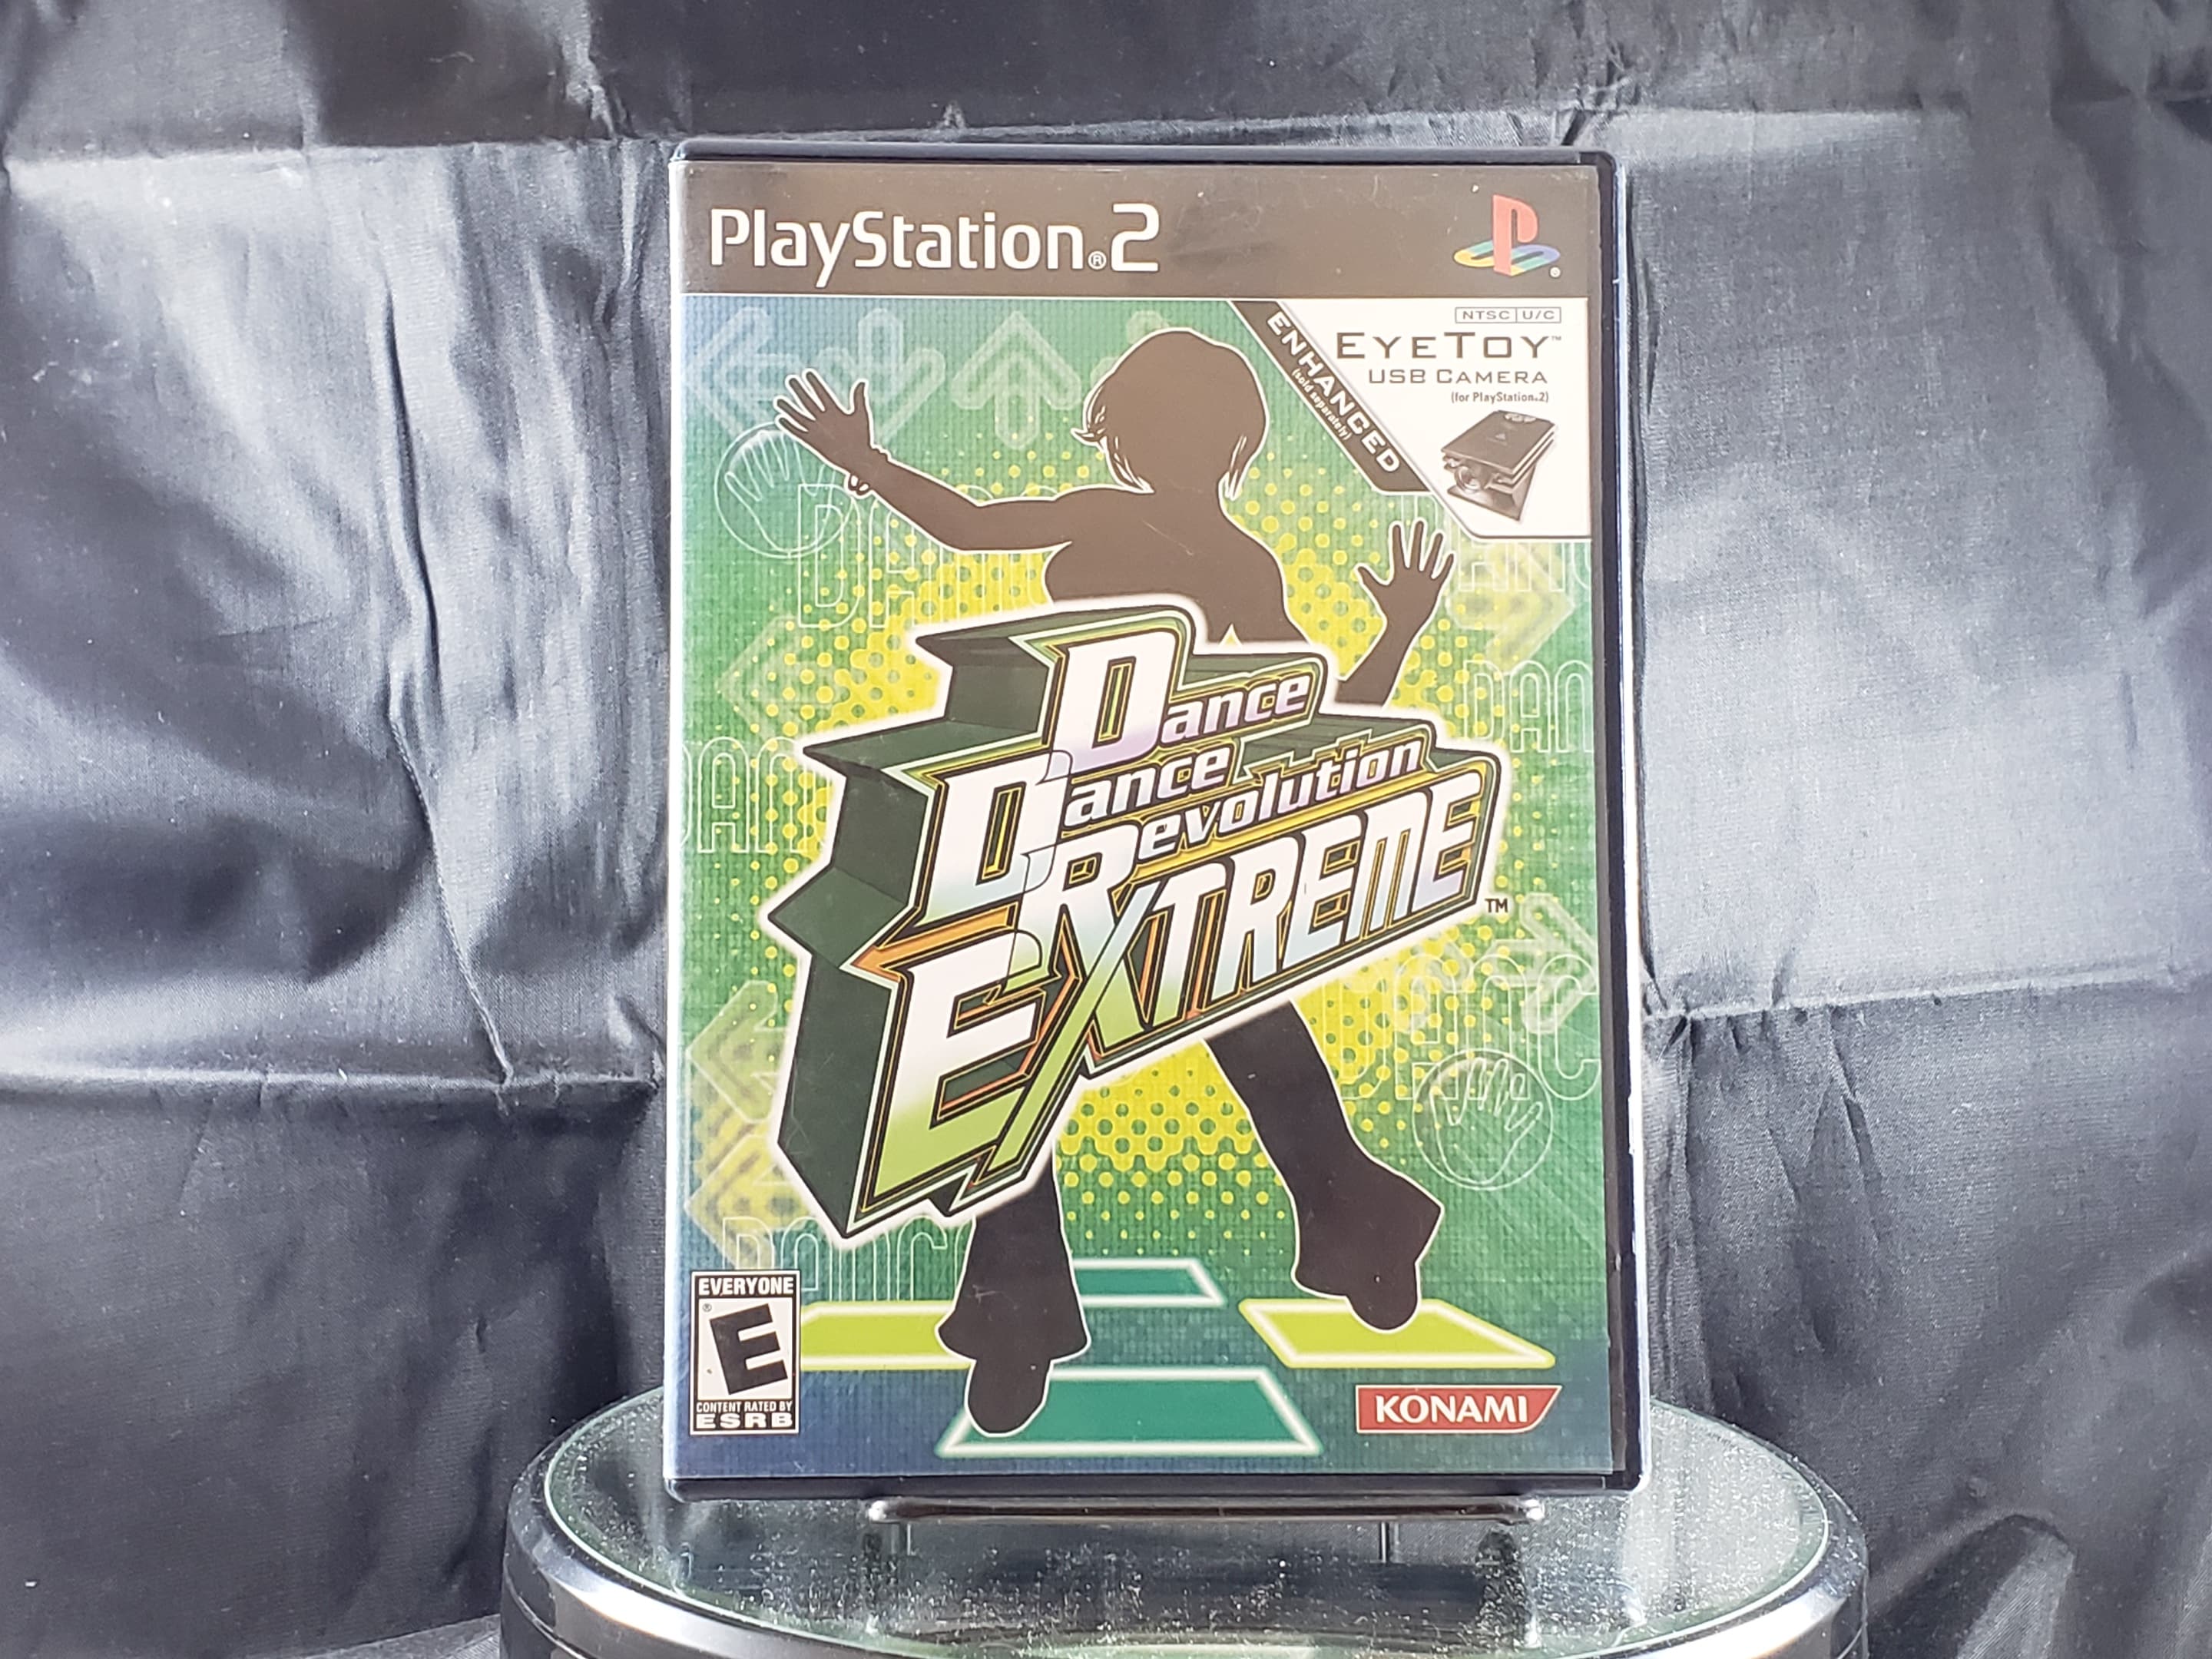 Dance Dance Revolution Extreme 2 - PlayStation 2